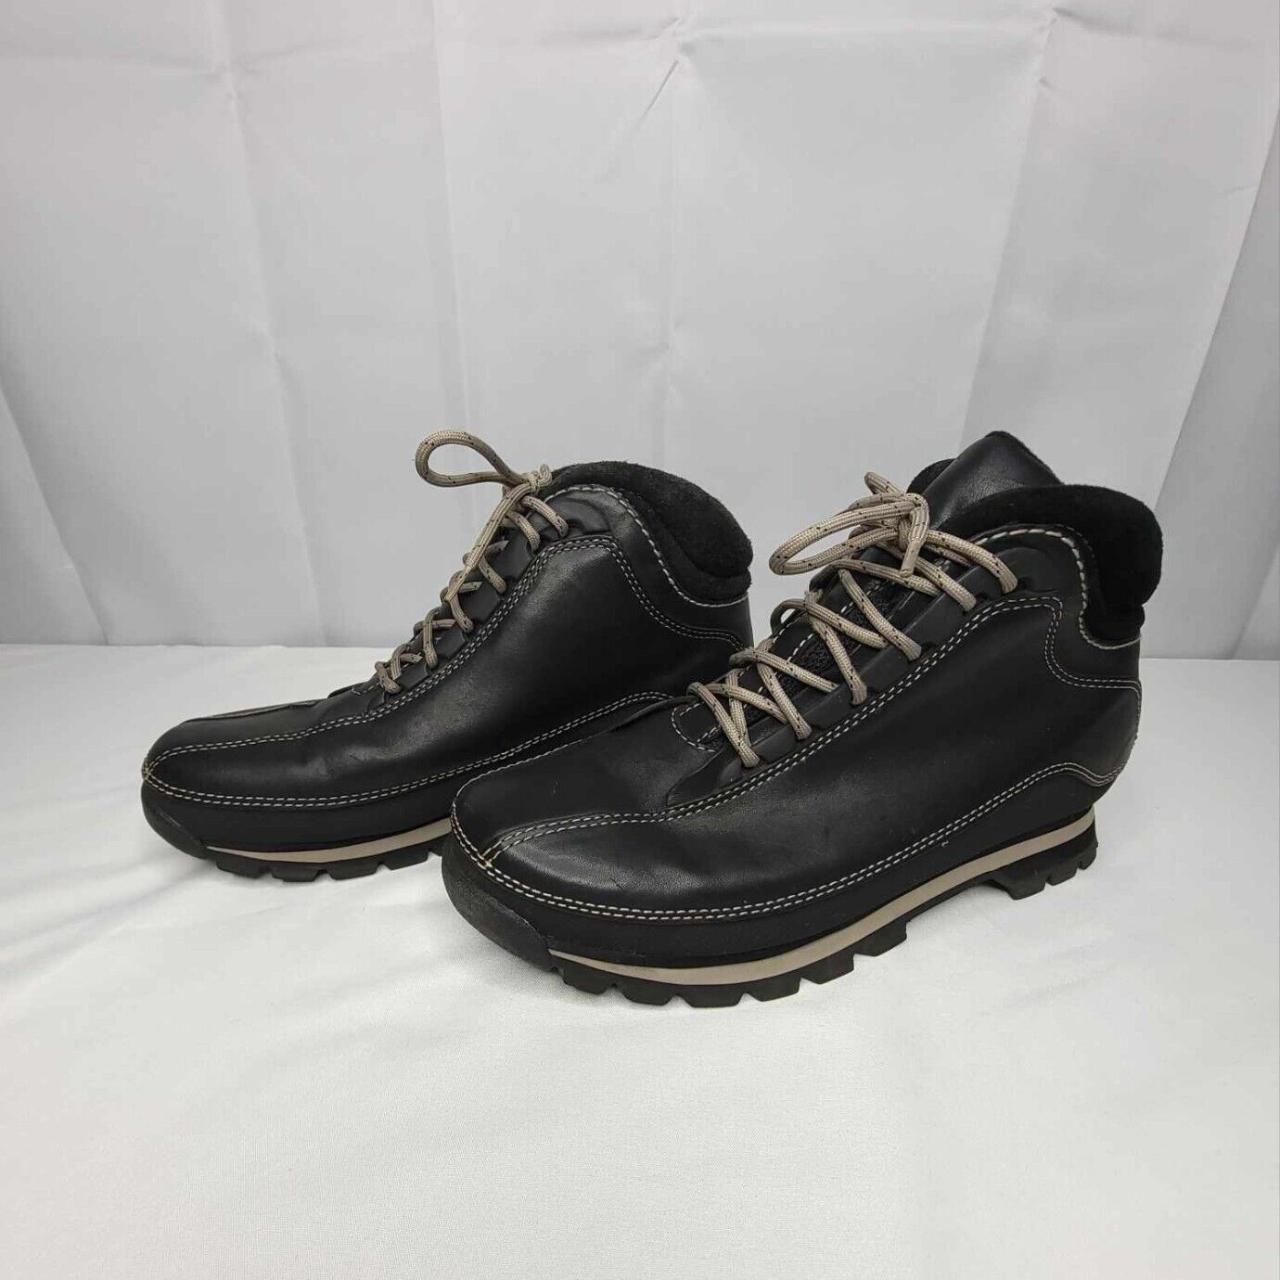 Covington Black Leather Womens Casual Boots Size 8... - Depop